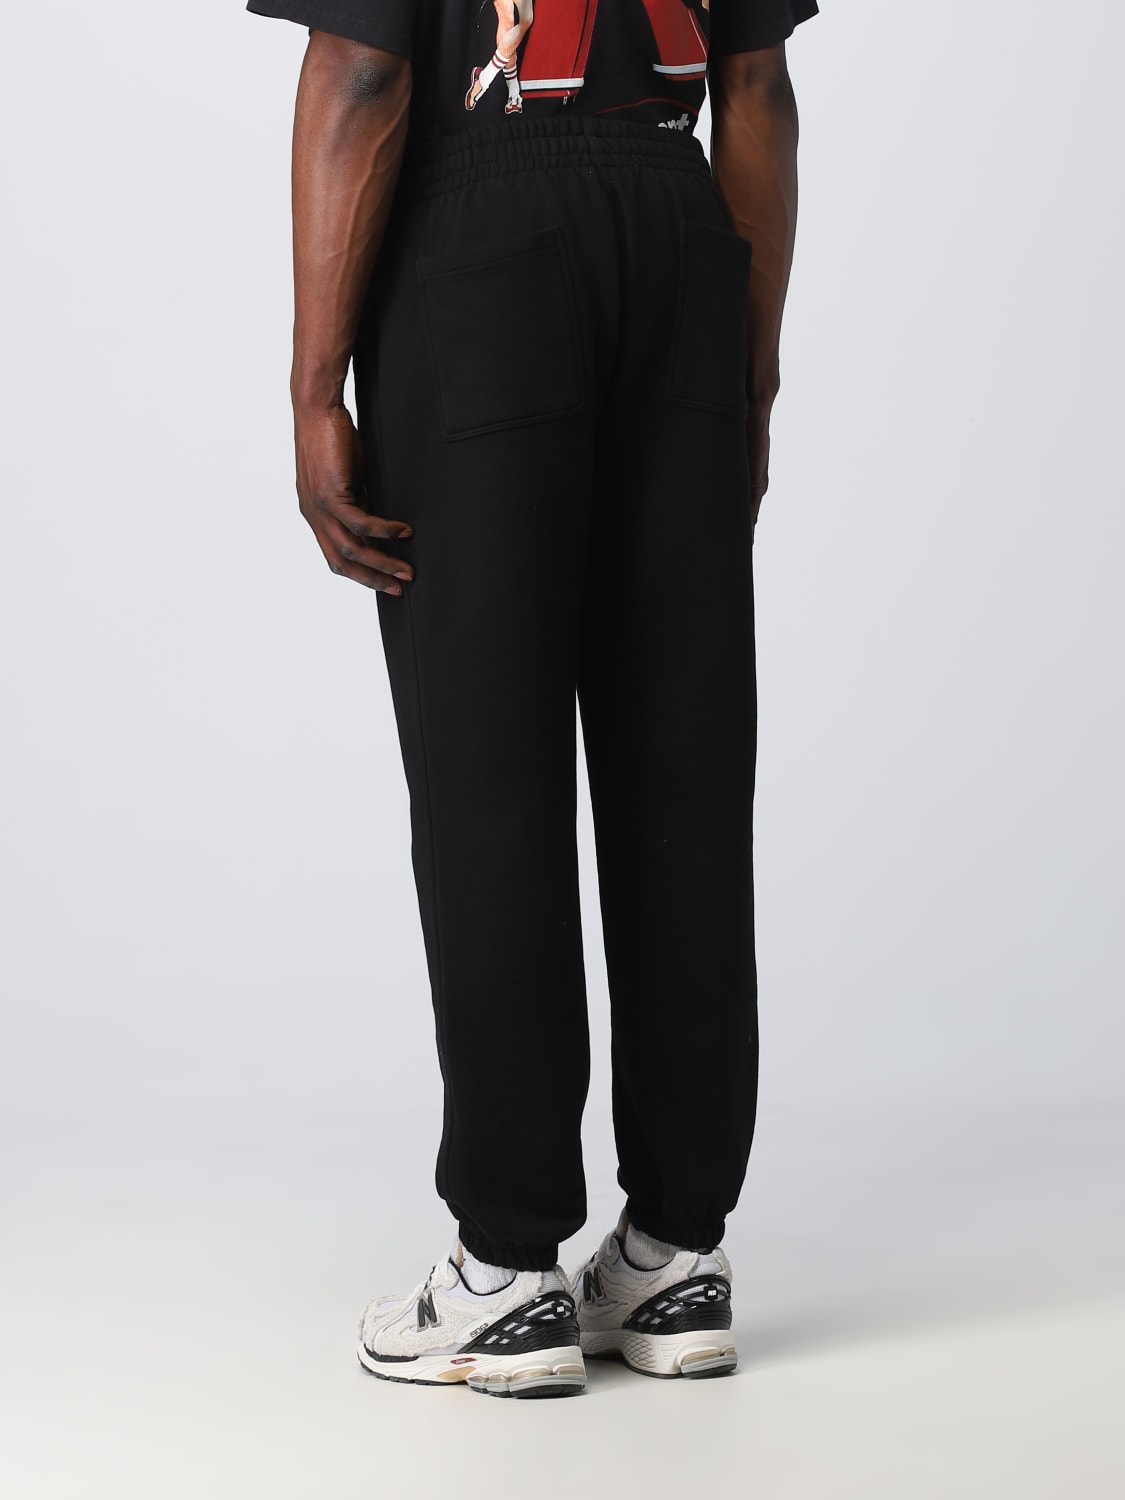 REPRESENT: pants for man - Black | Represent pants M08175 online on ...